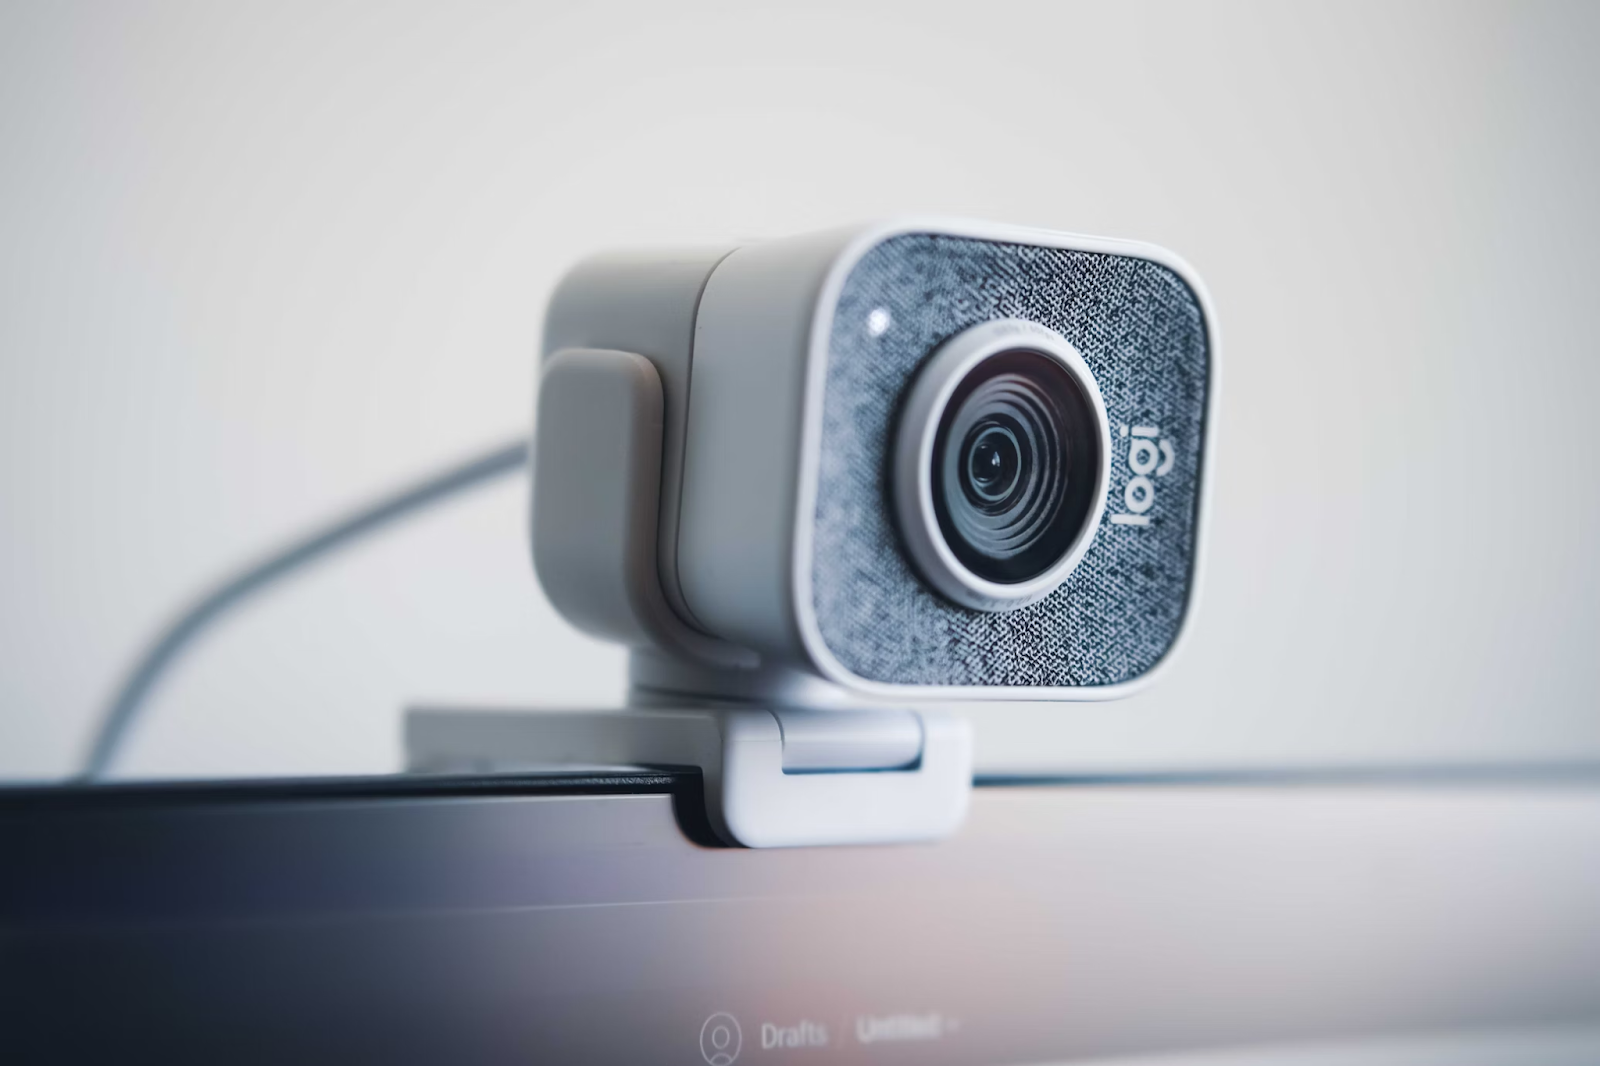 A webcam